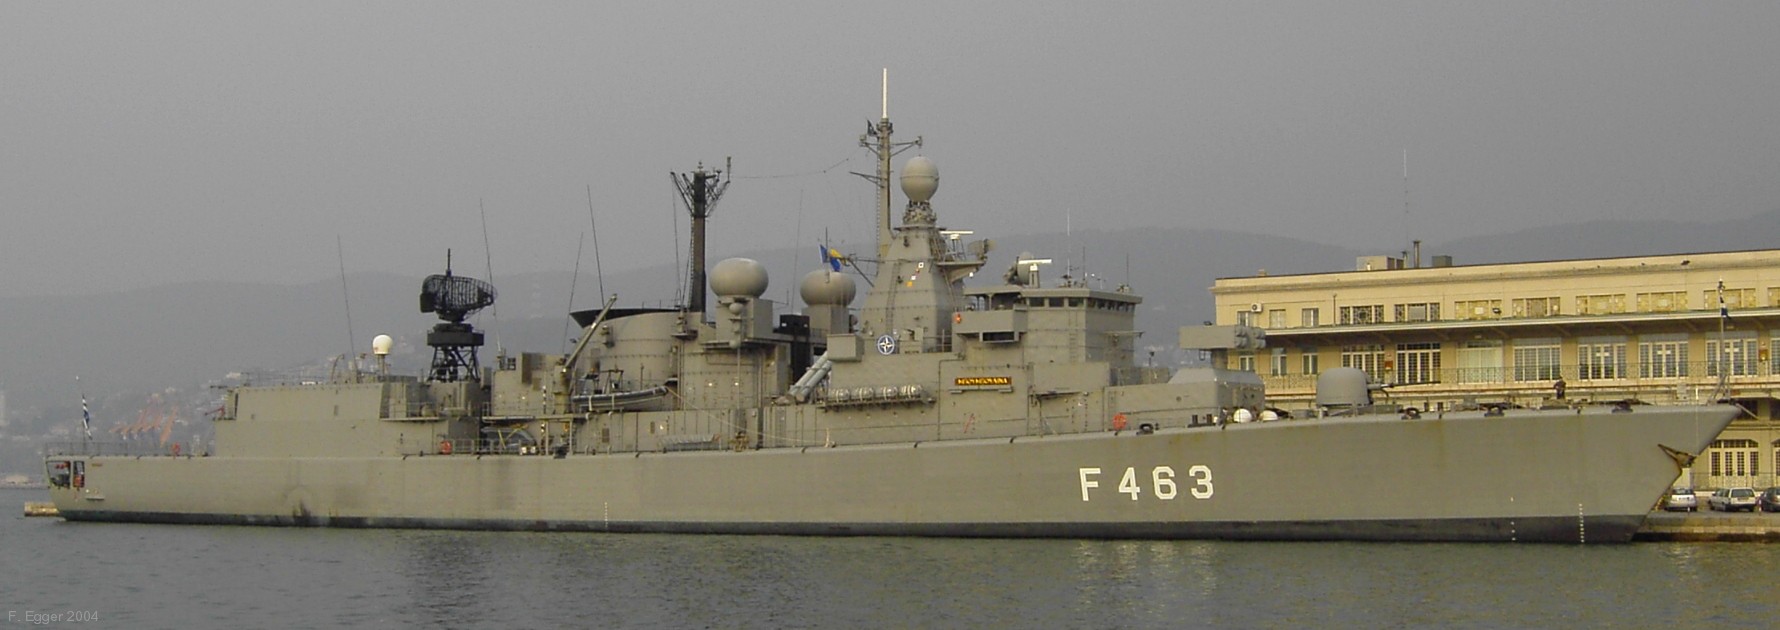 f 463 hs bouboulina elli kortenaer class frigate hellenic navy greece 06 stanavformed 2004